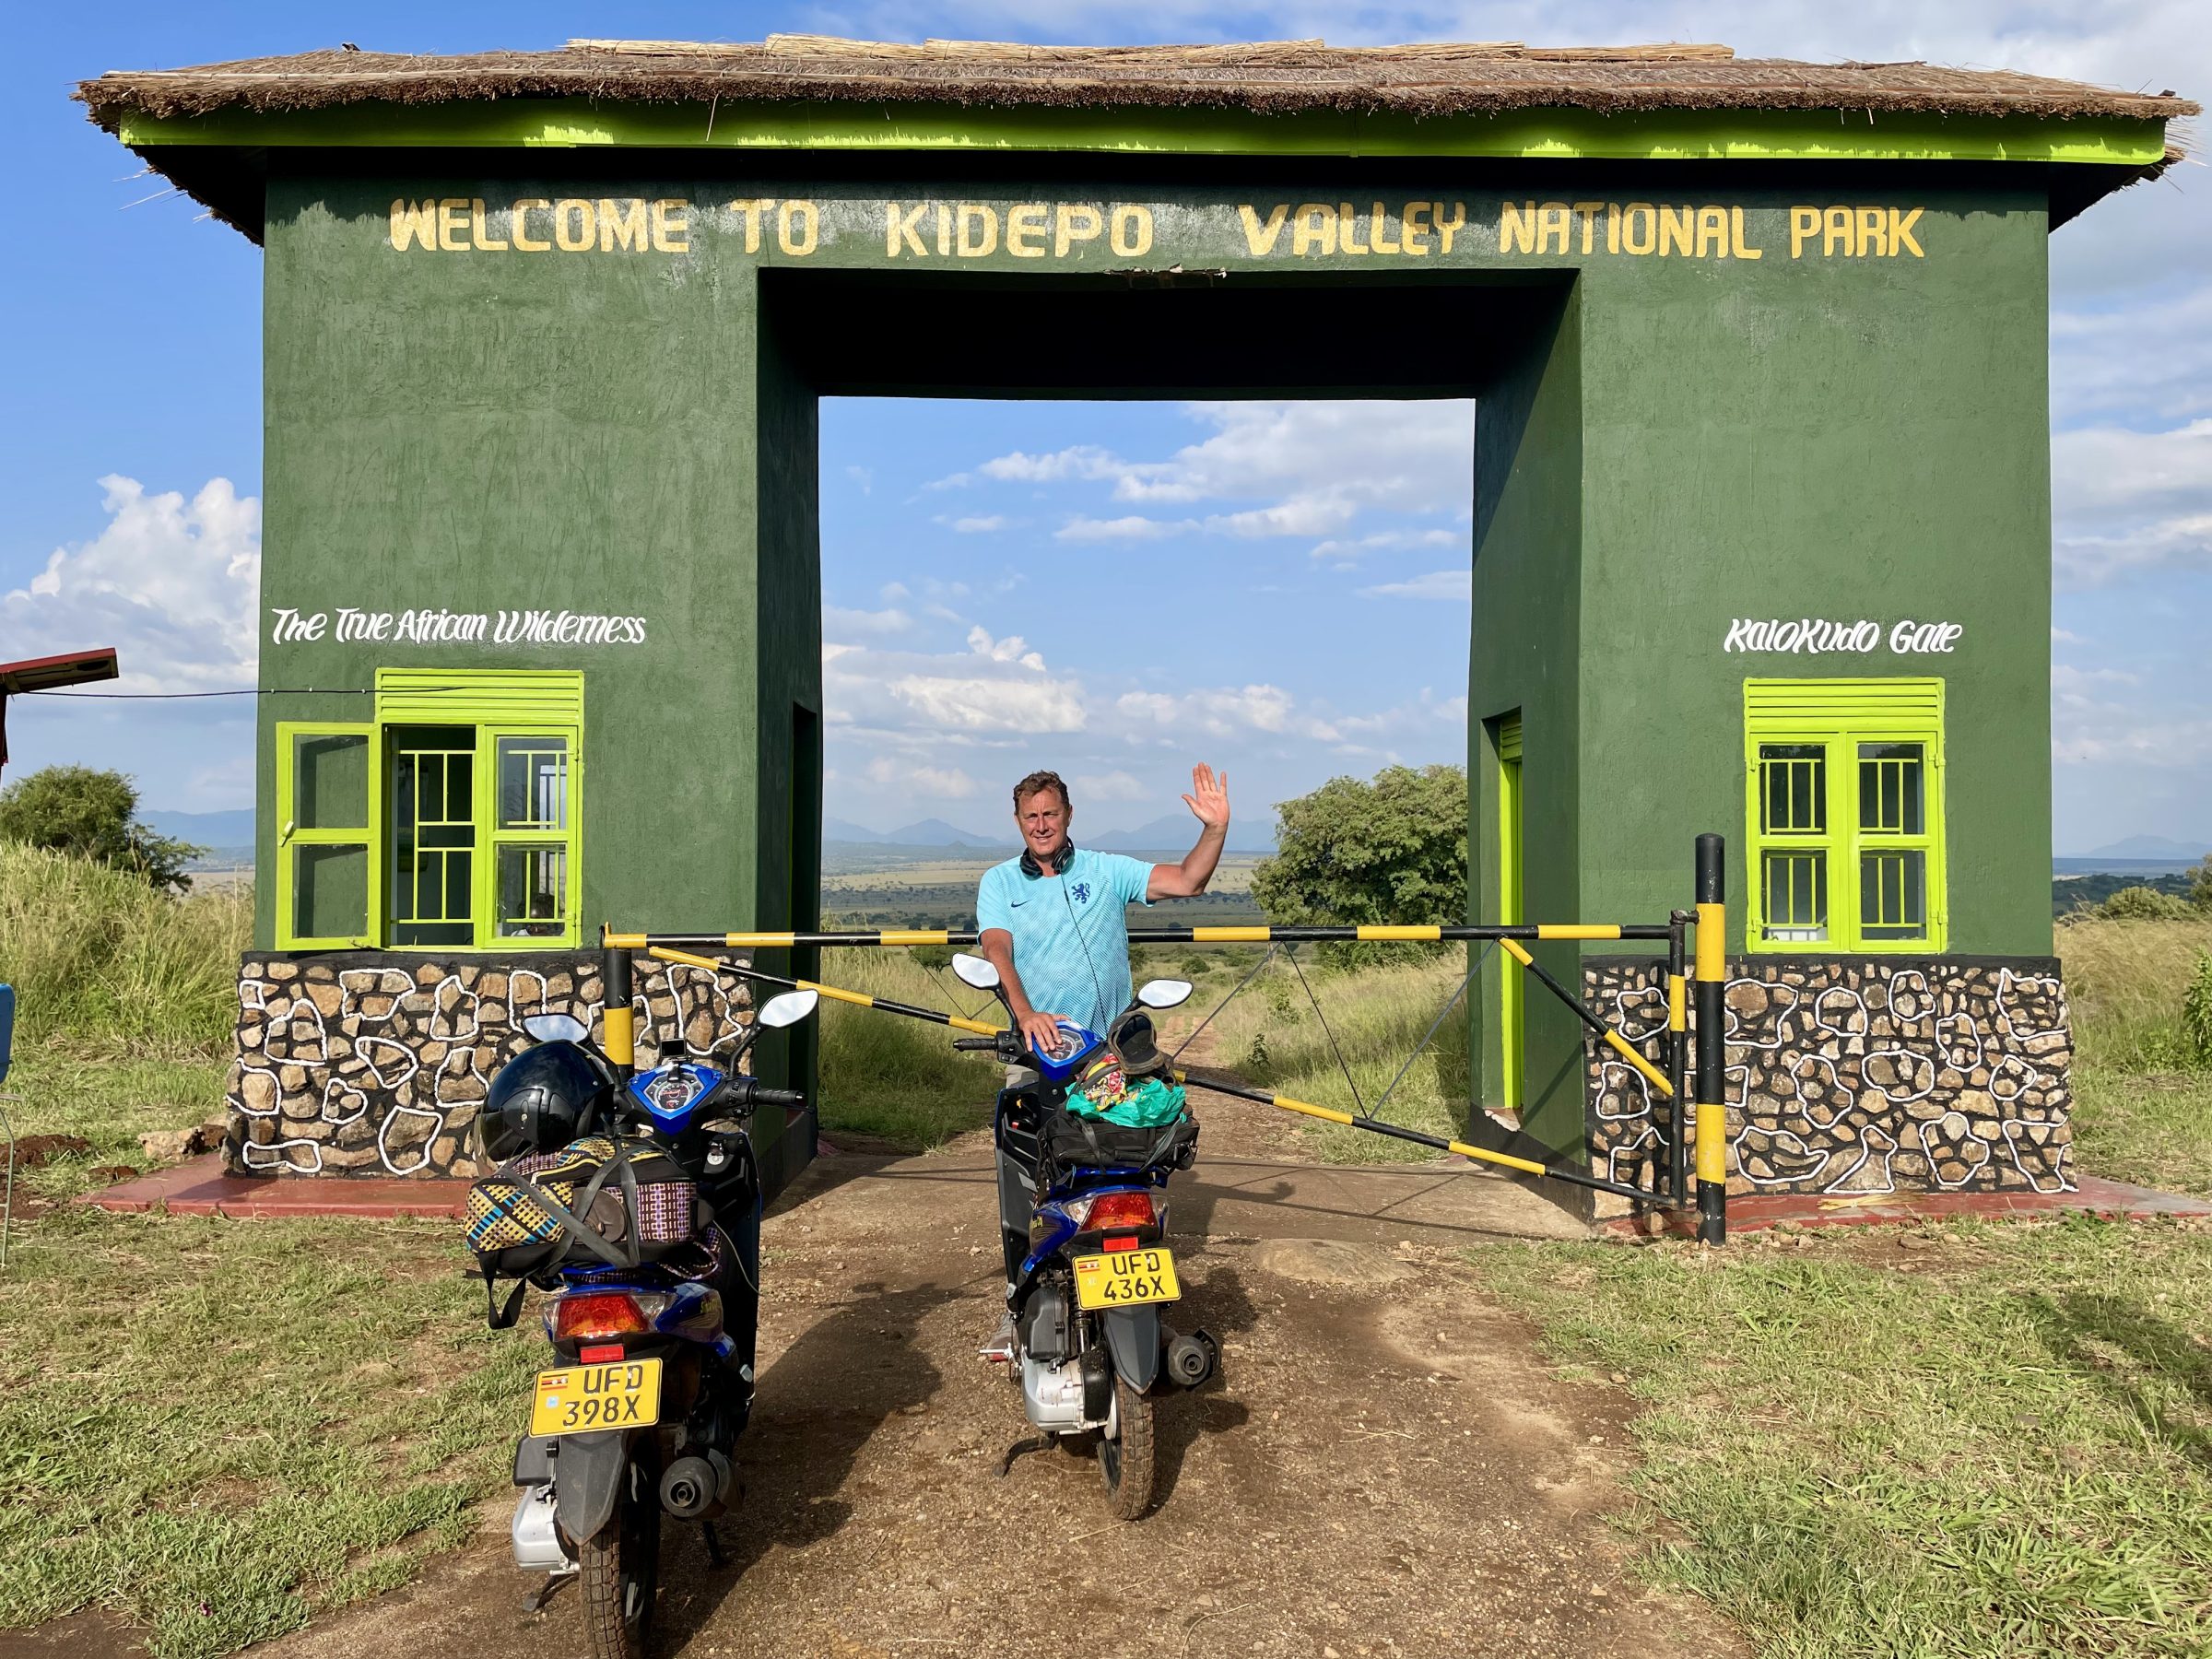 De nieuw Kalokudo gate van Kidepo Valley NP